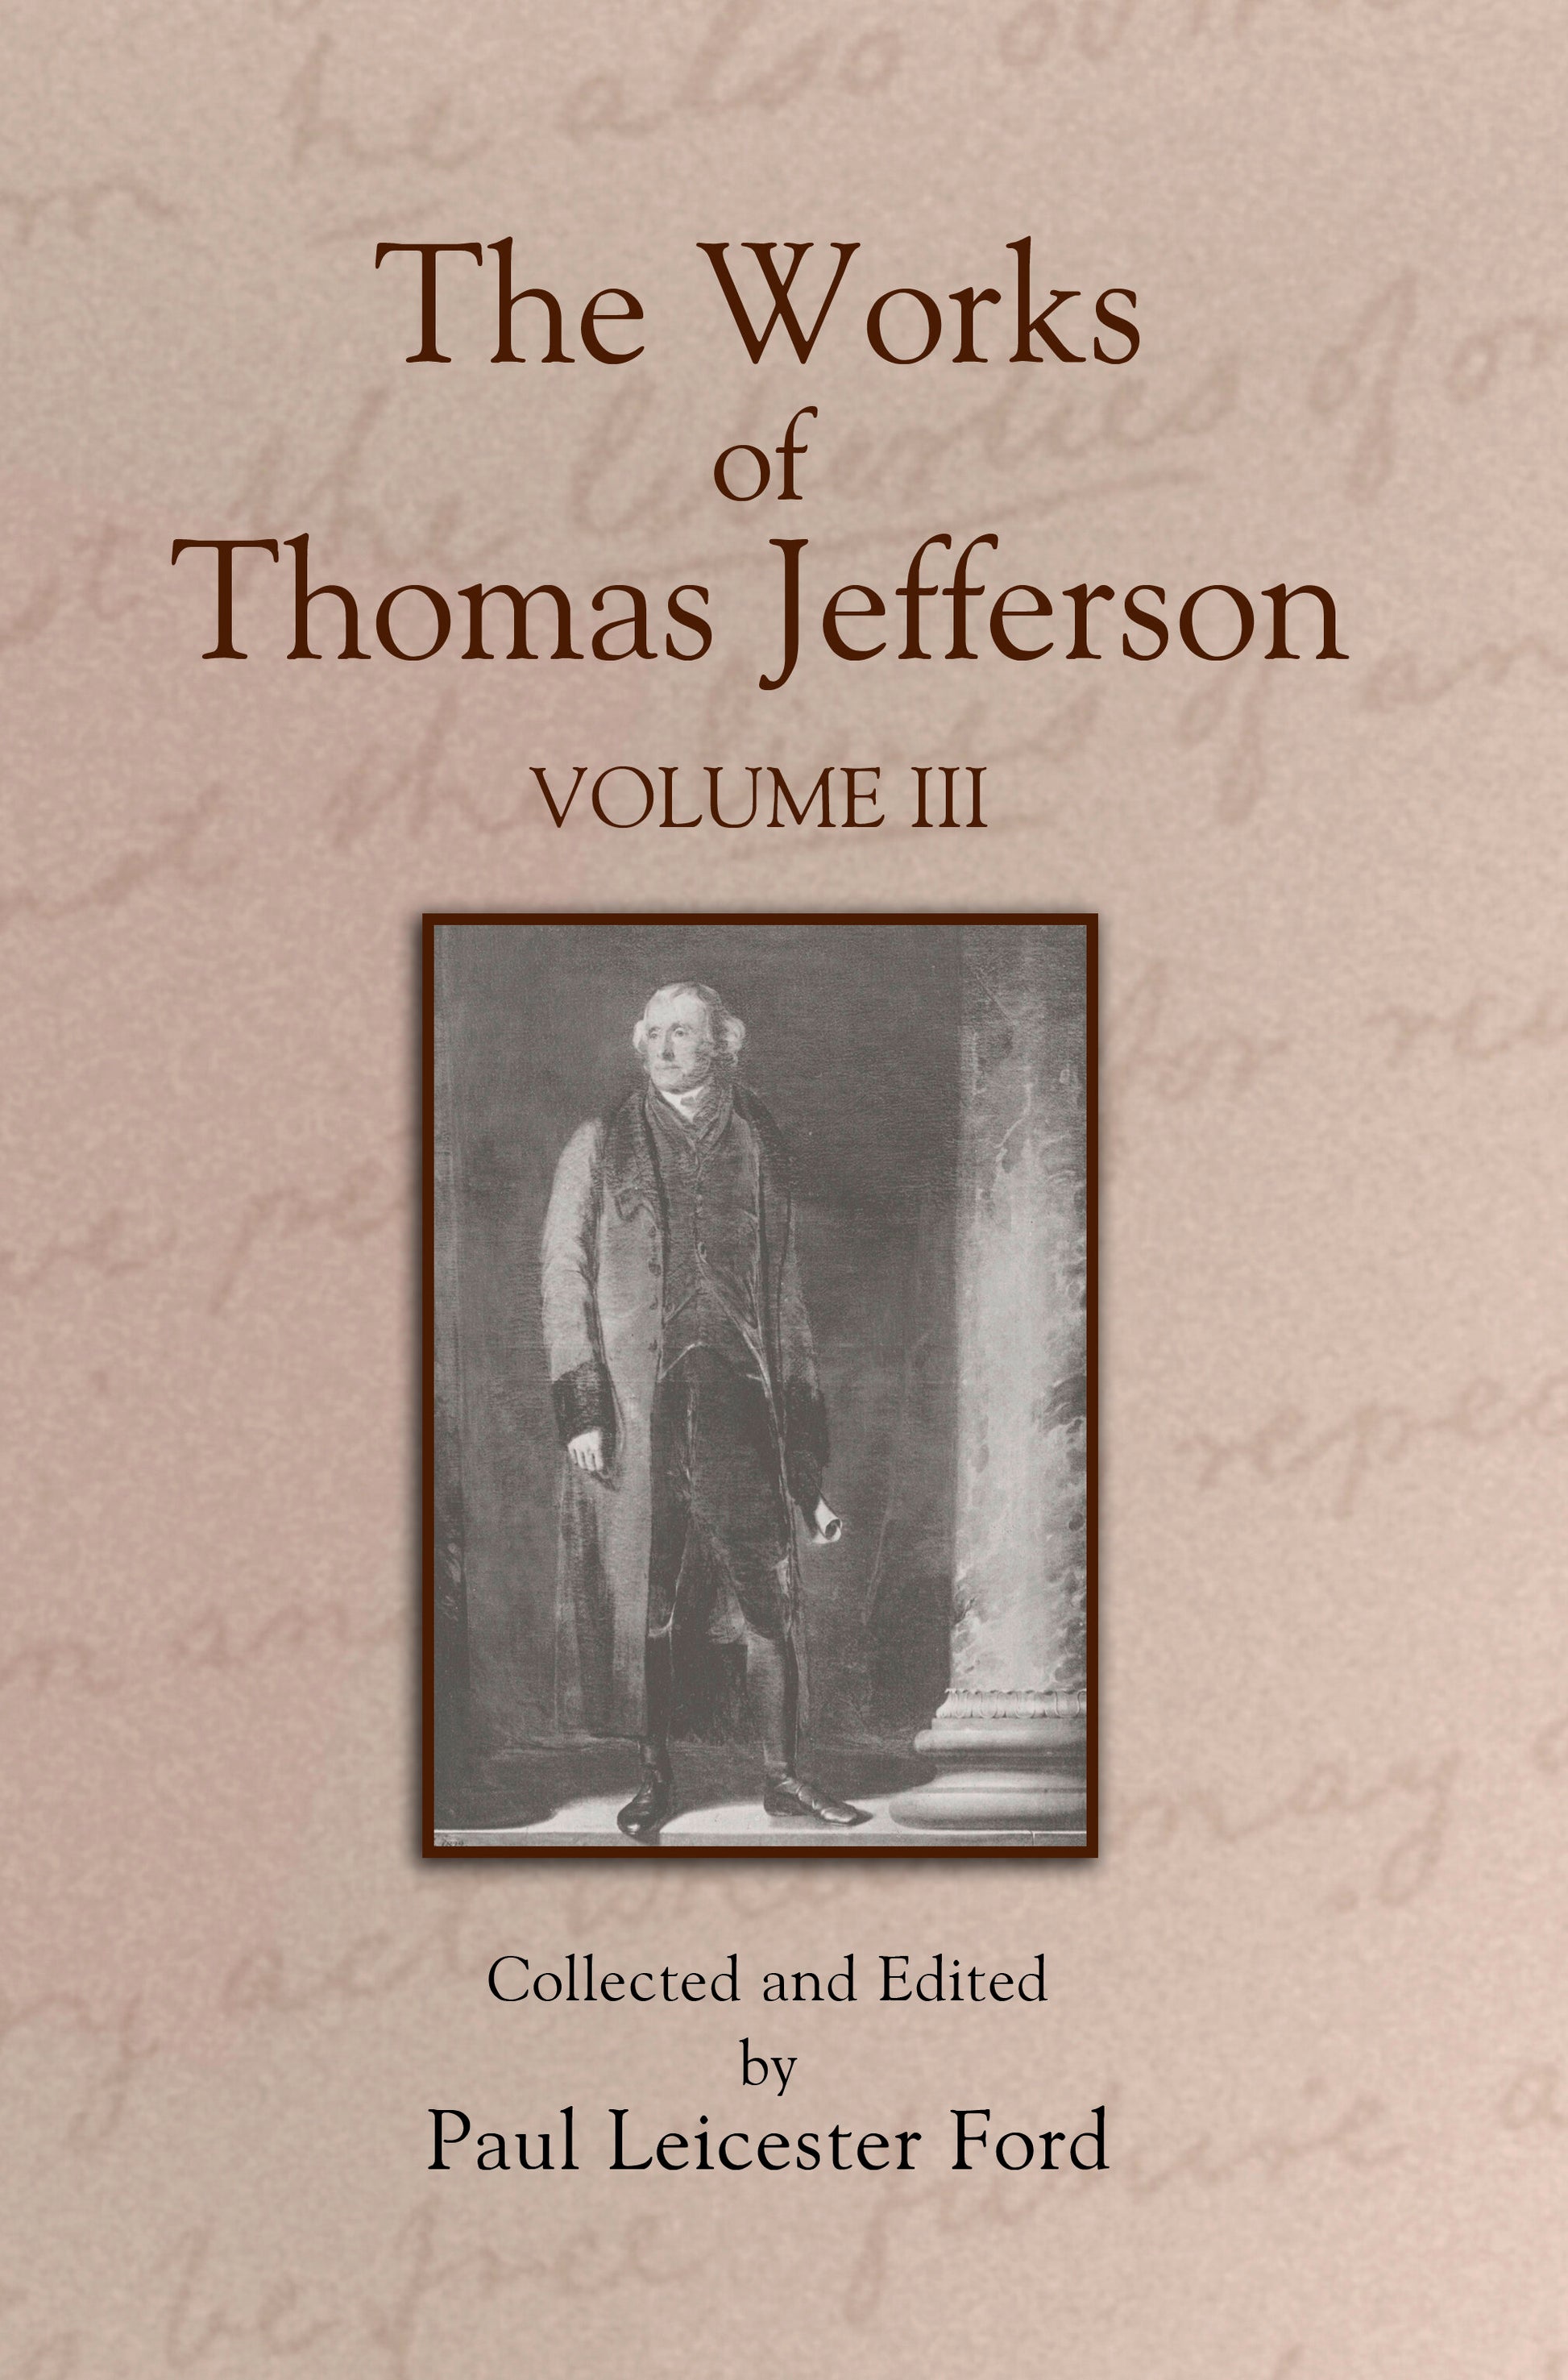 The Works of Thomas Jefferson: Volume III